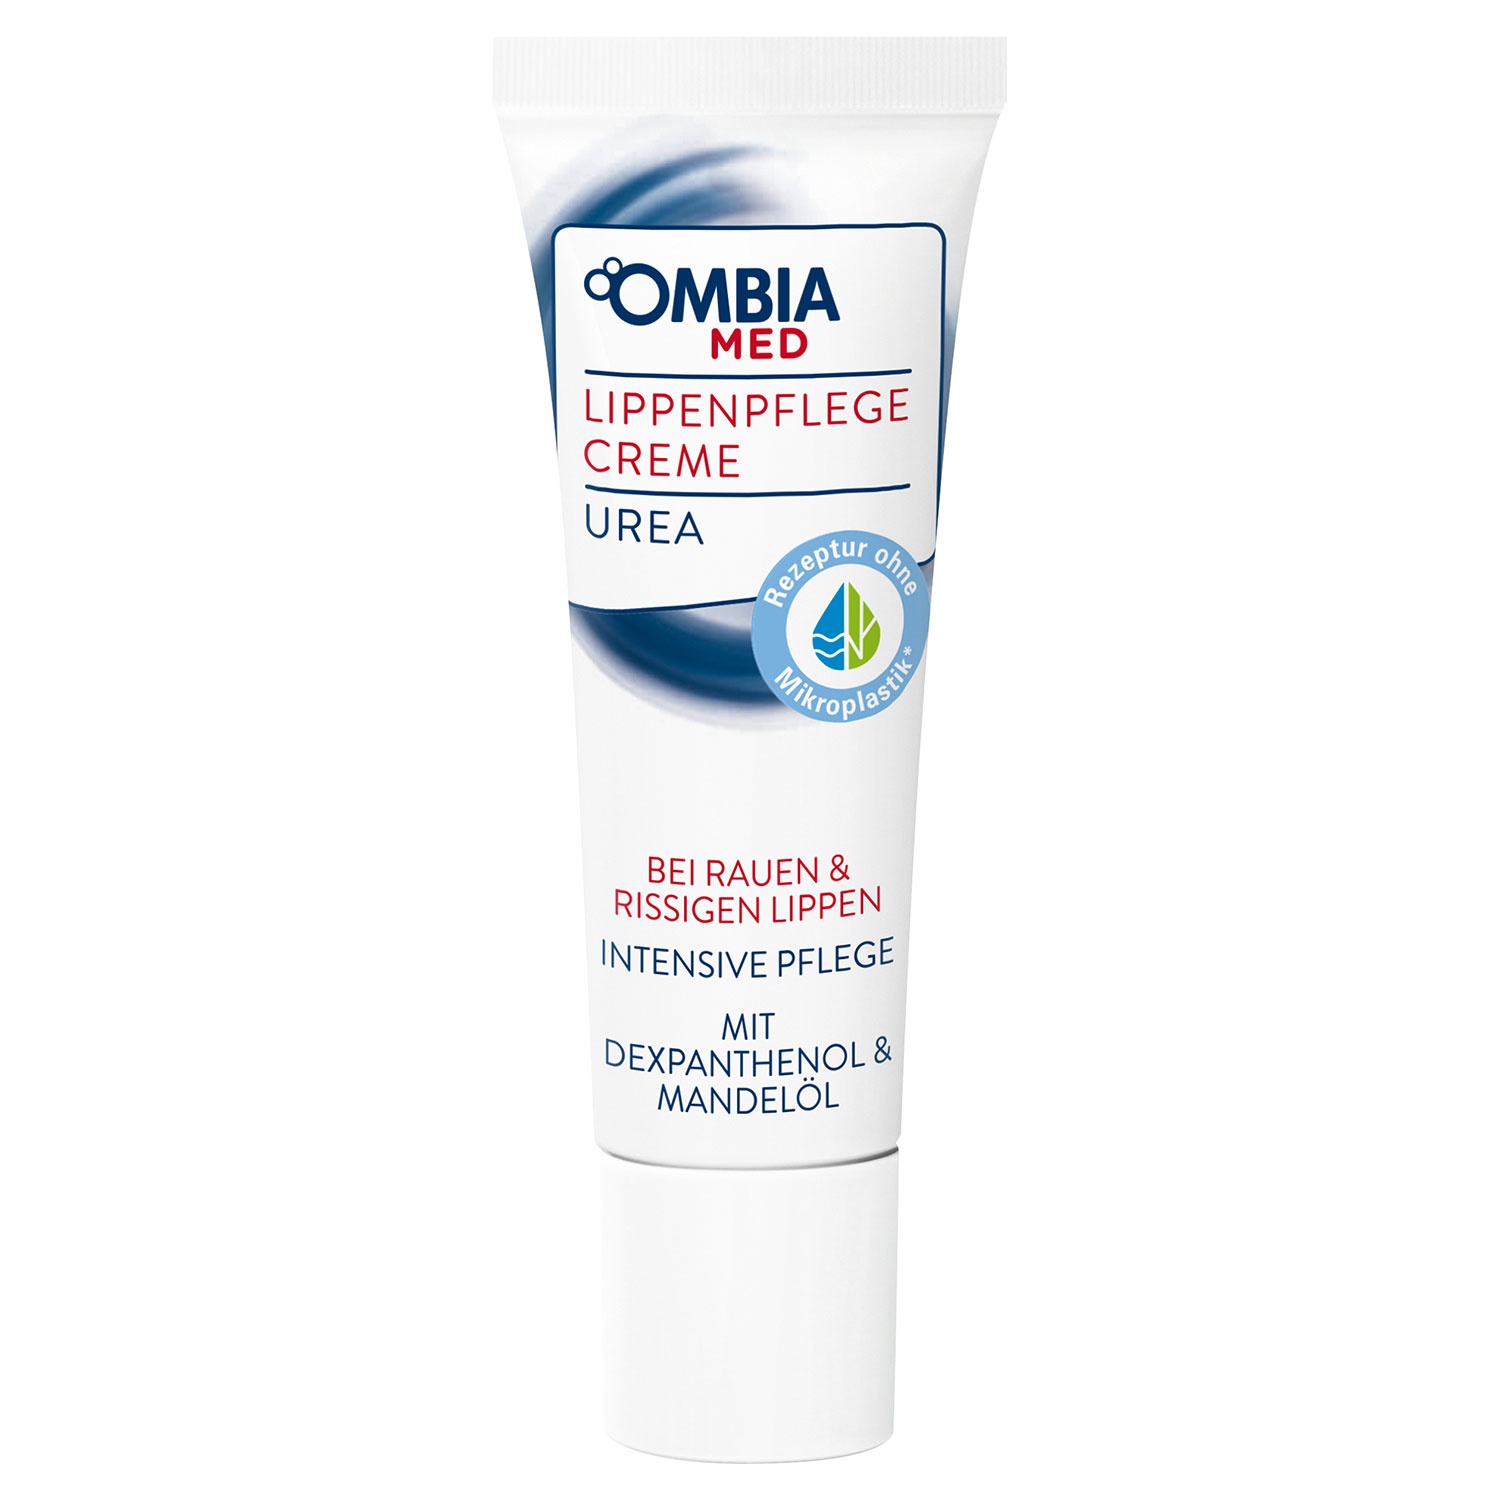 OMBIA MED Lippenpflege-Creme 10 ml